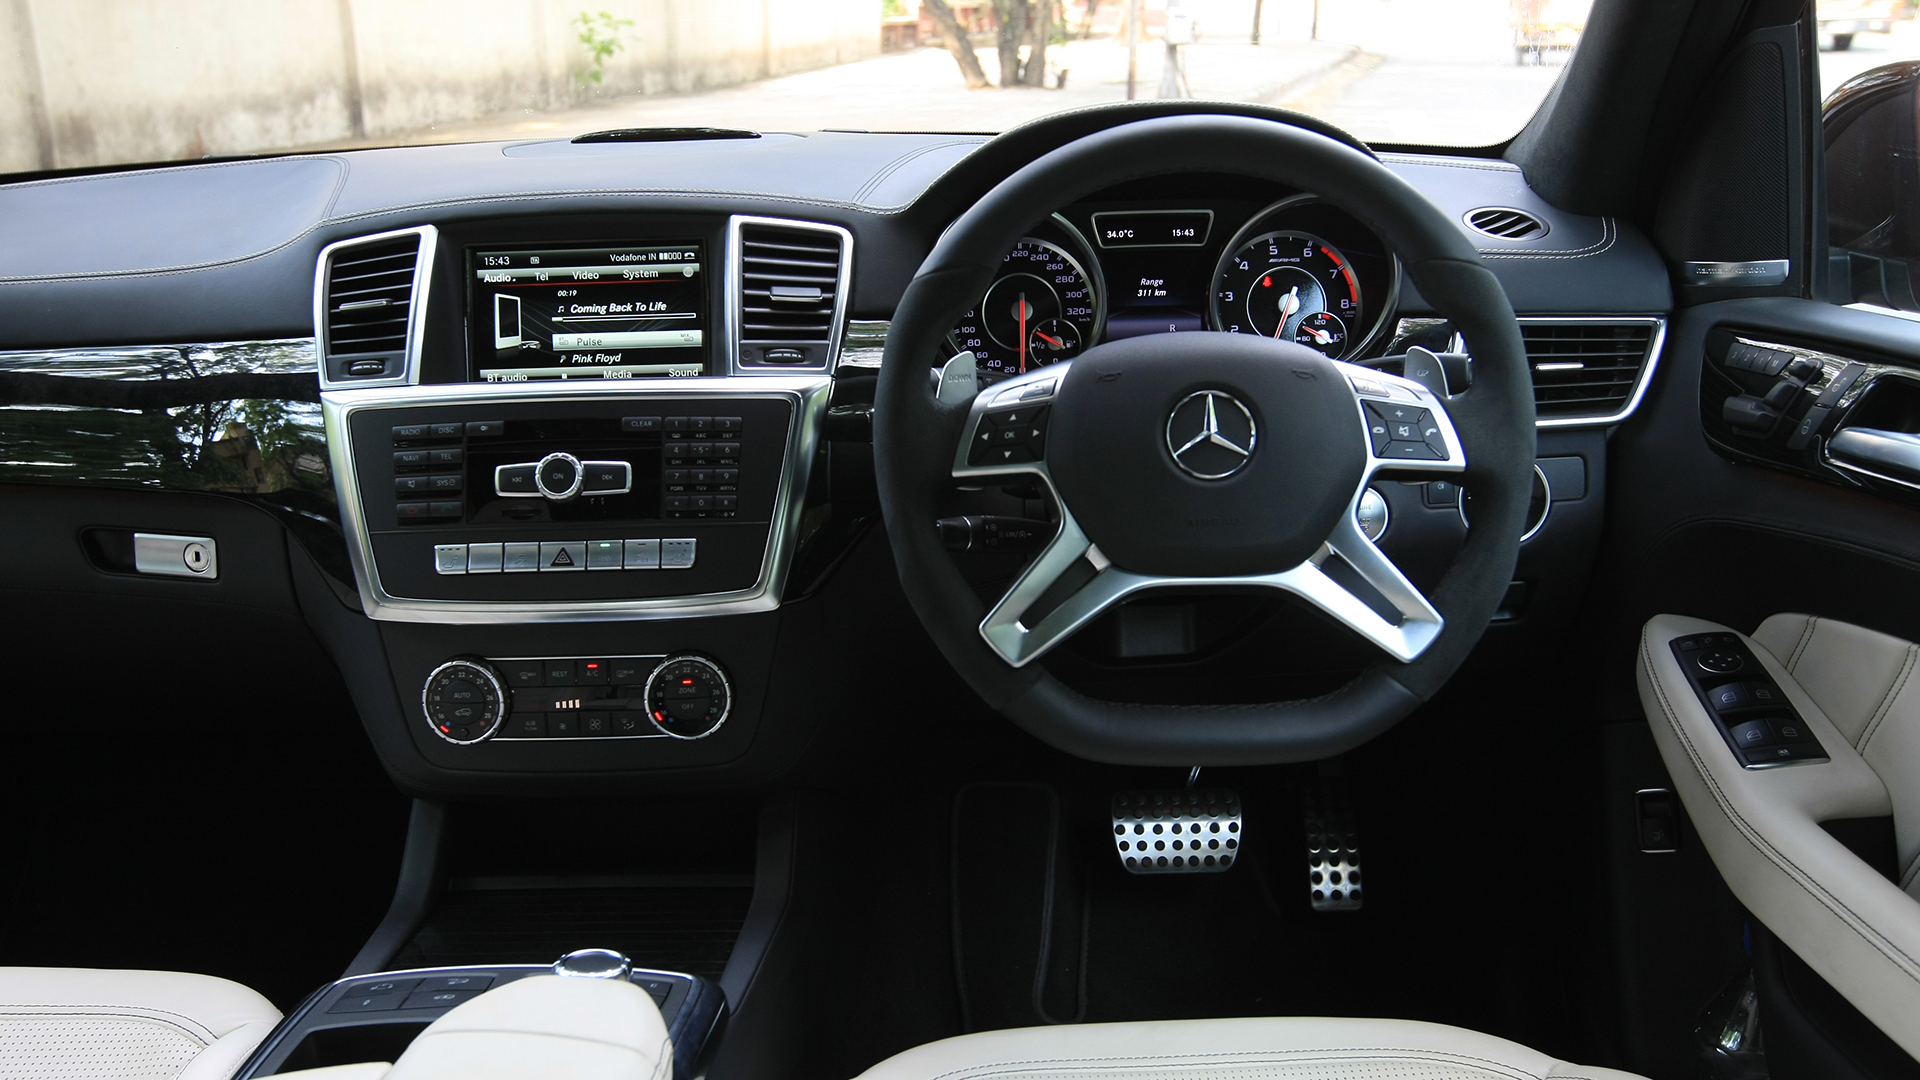 Mercedesbenz ML-63 2014 AMG Interior